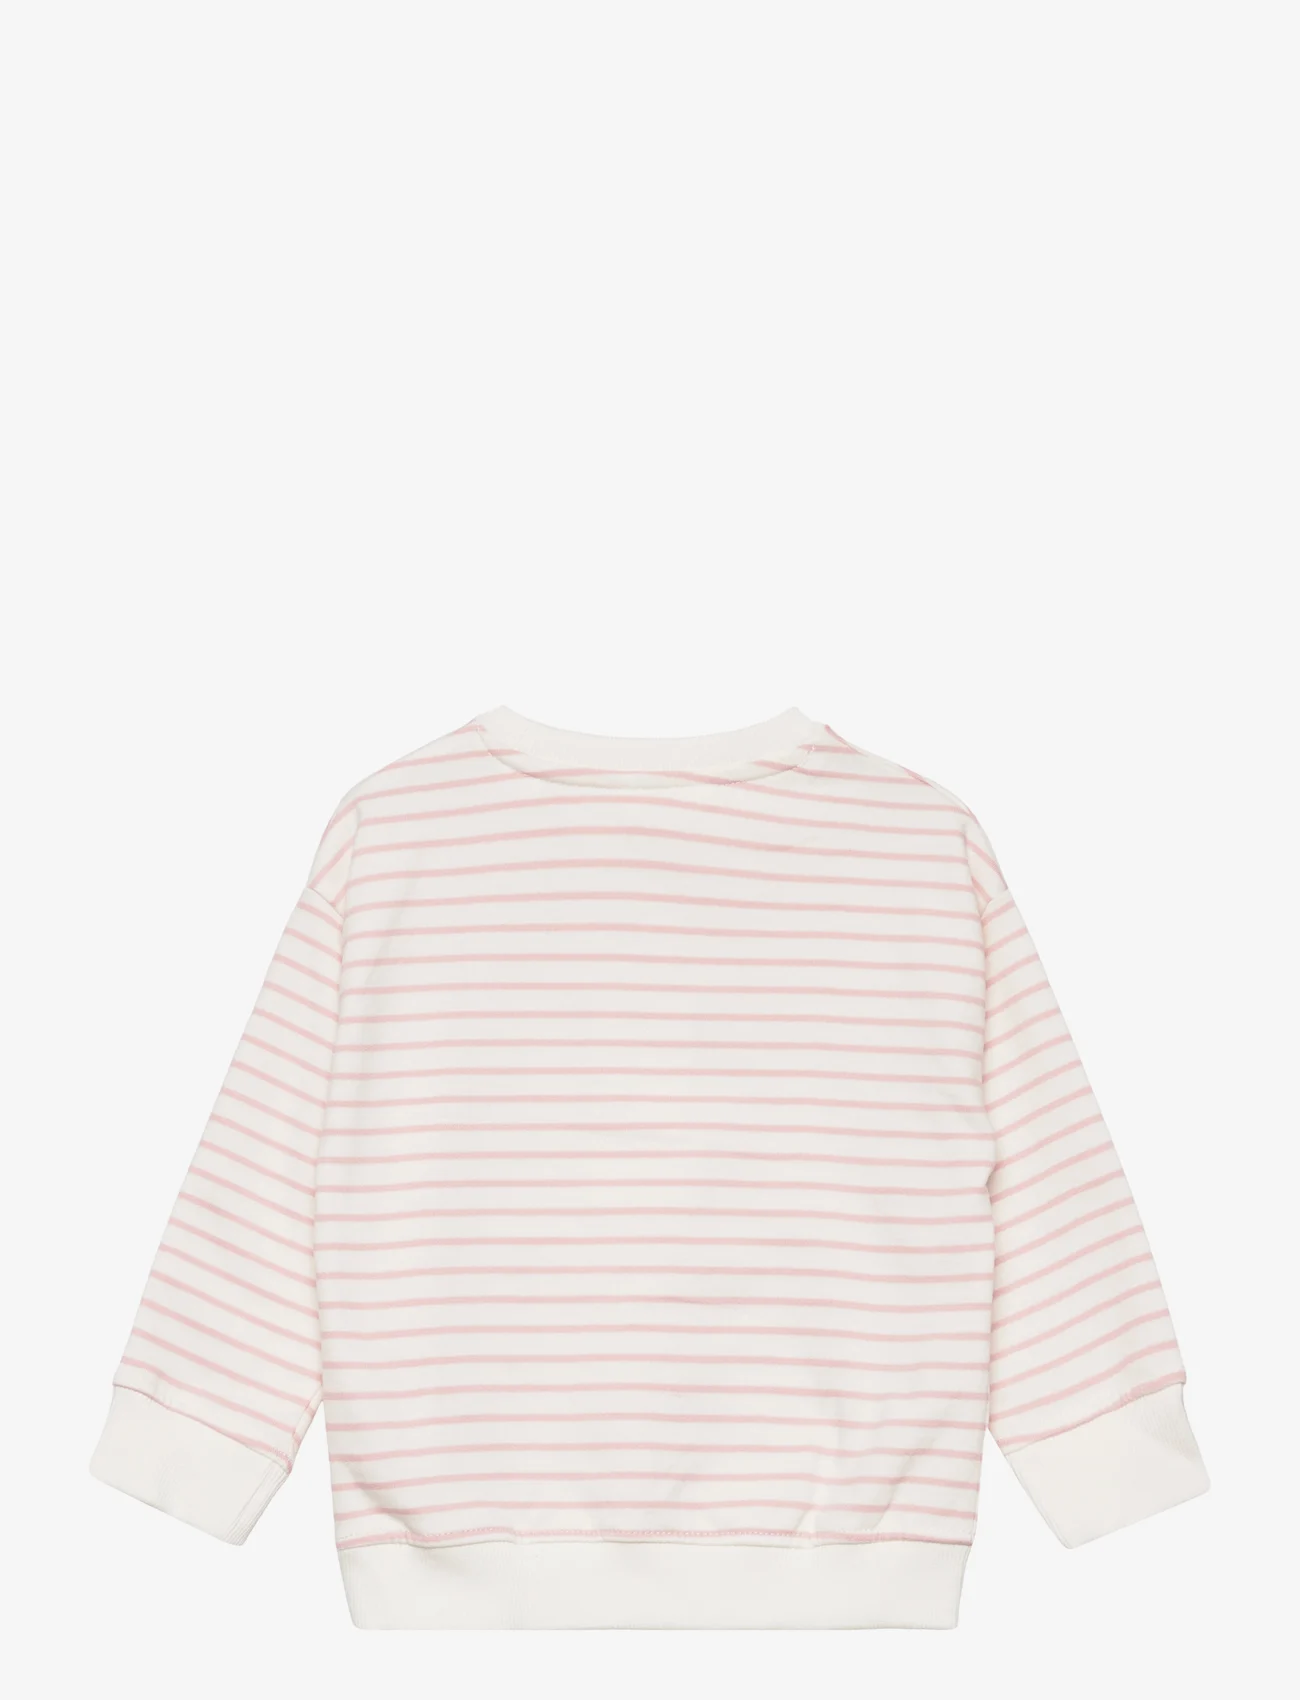 Mango - Striped cotton-blend sweatshirt - sweatshirts - pink - 1